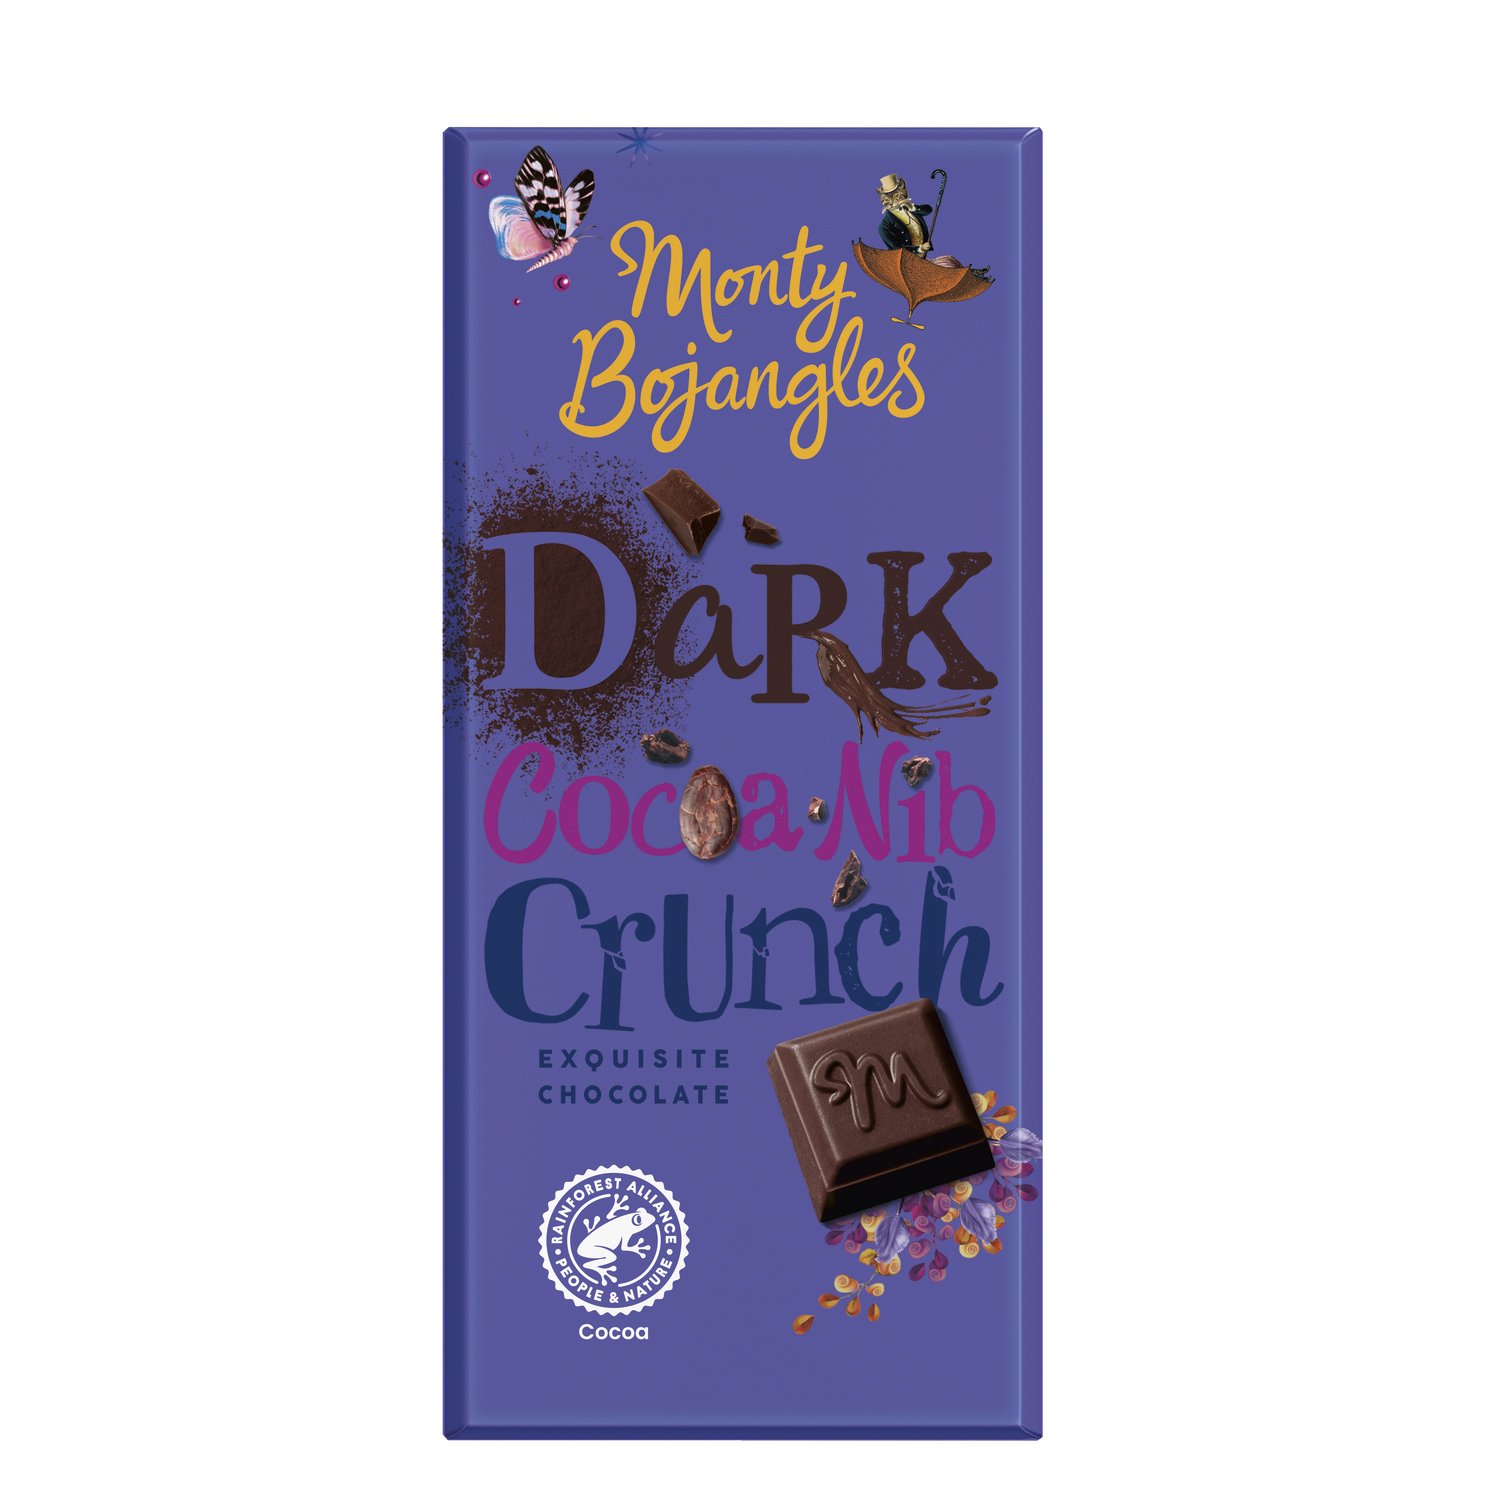 Dark Cocoa Nib Crunch exquisite chocolate bar - 18x150g